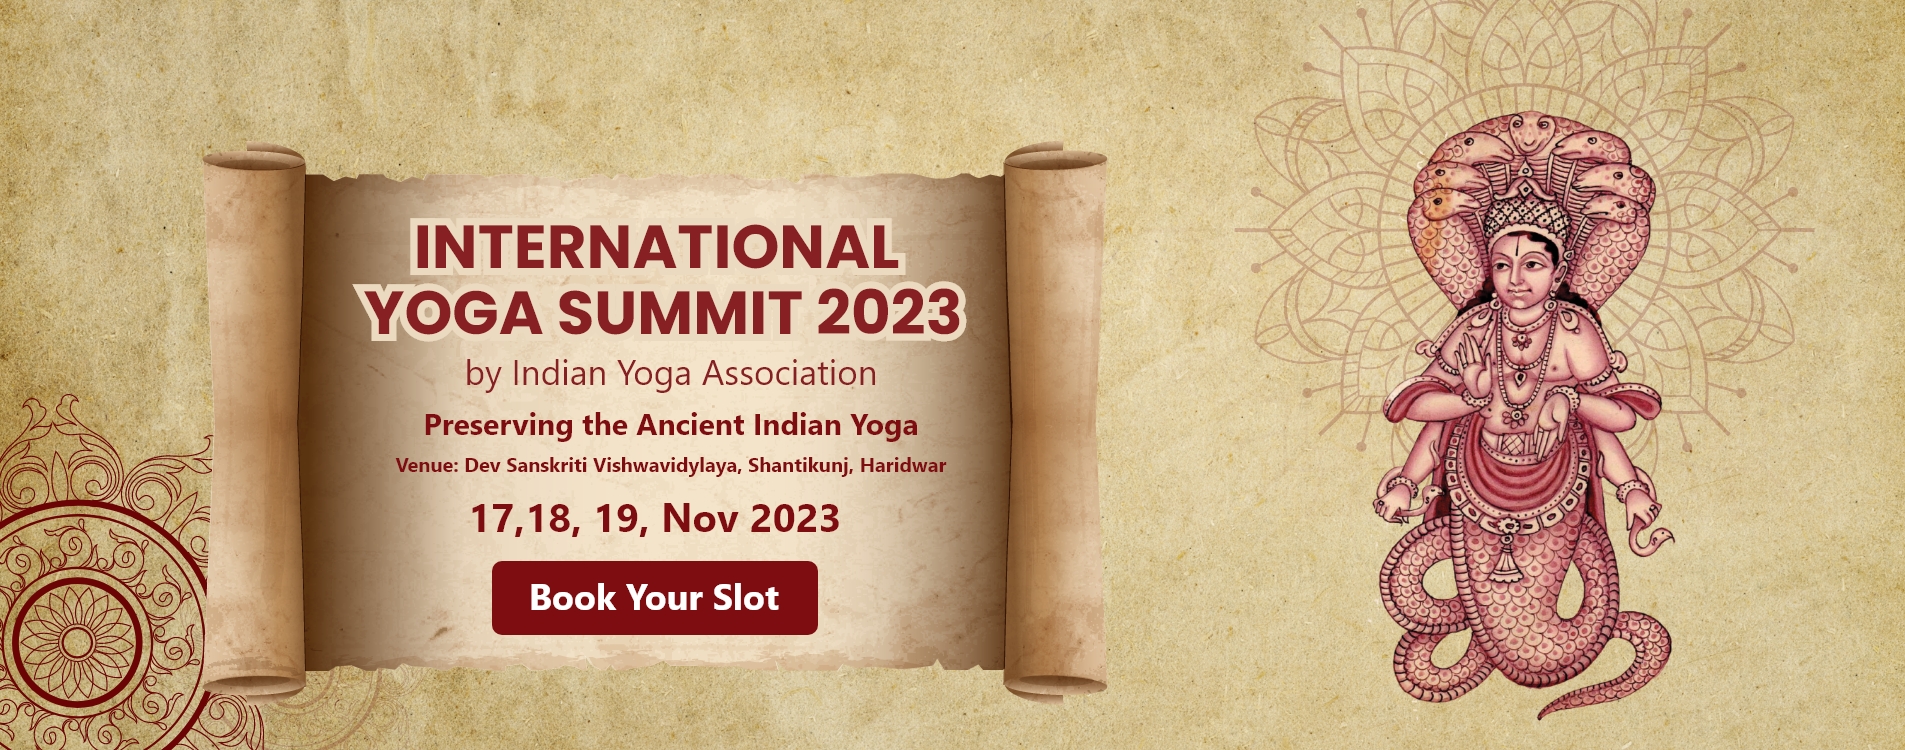 international-yoga-summit-2023